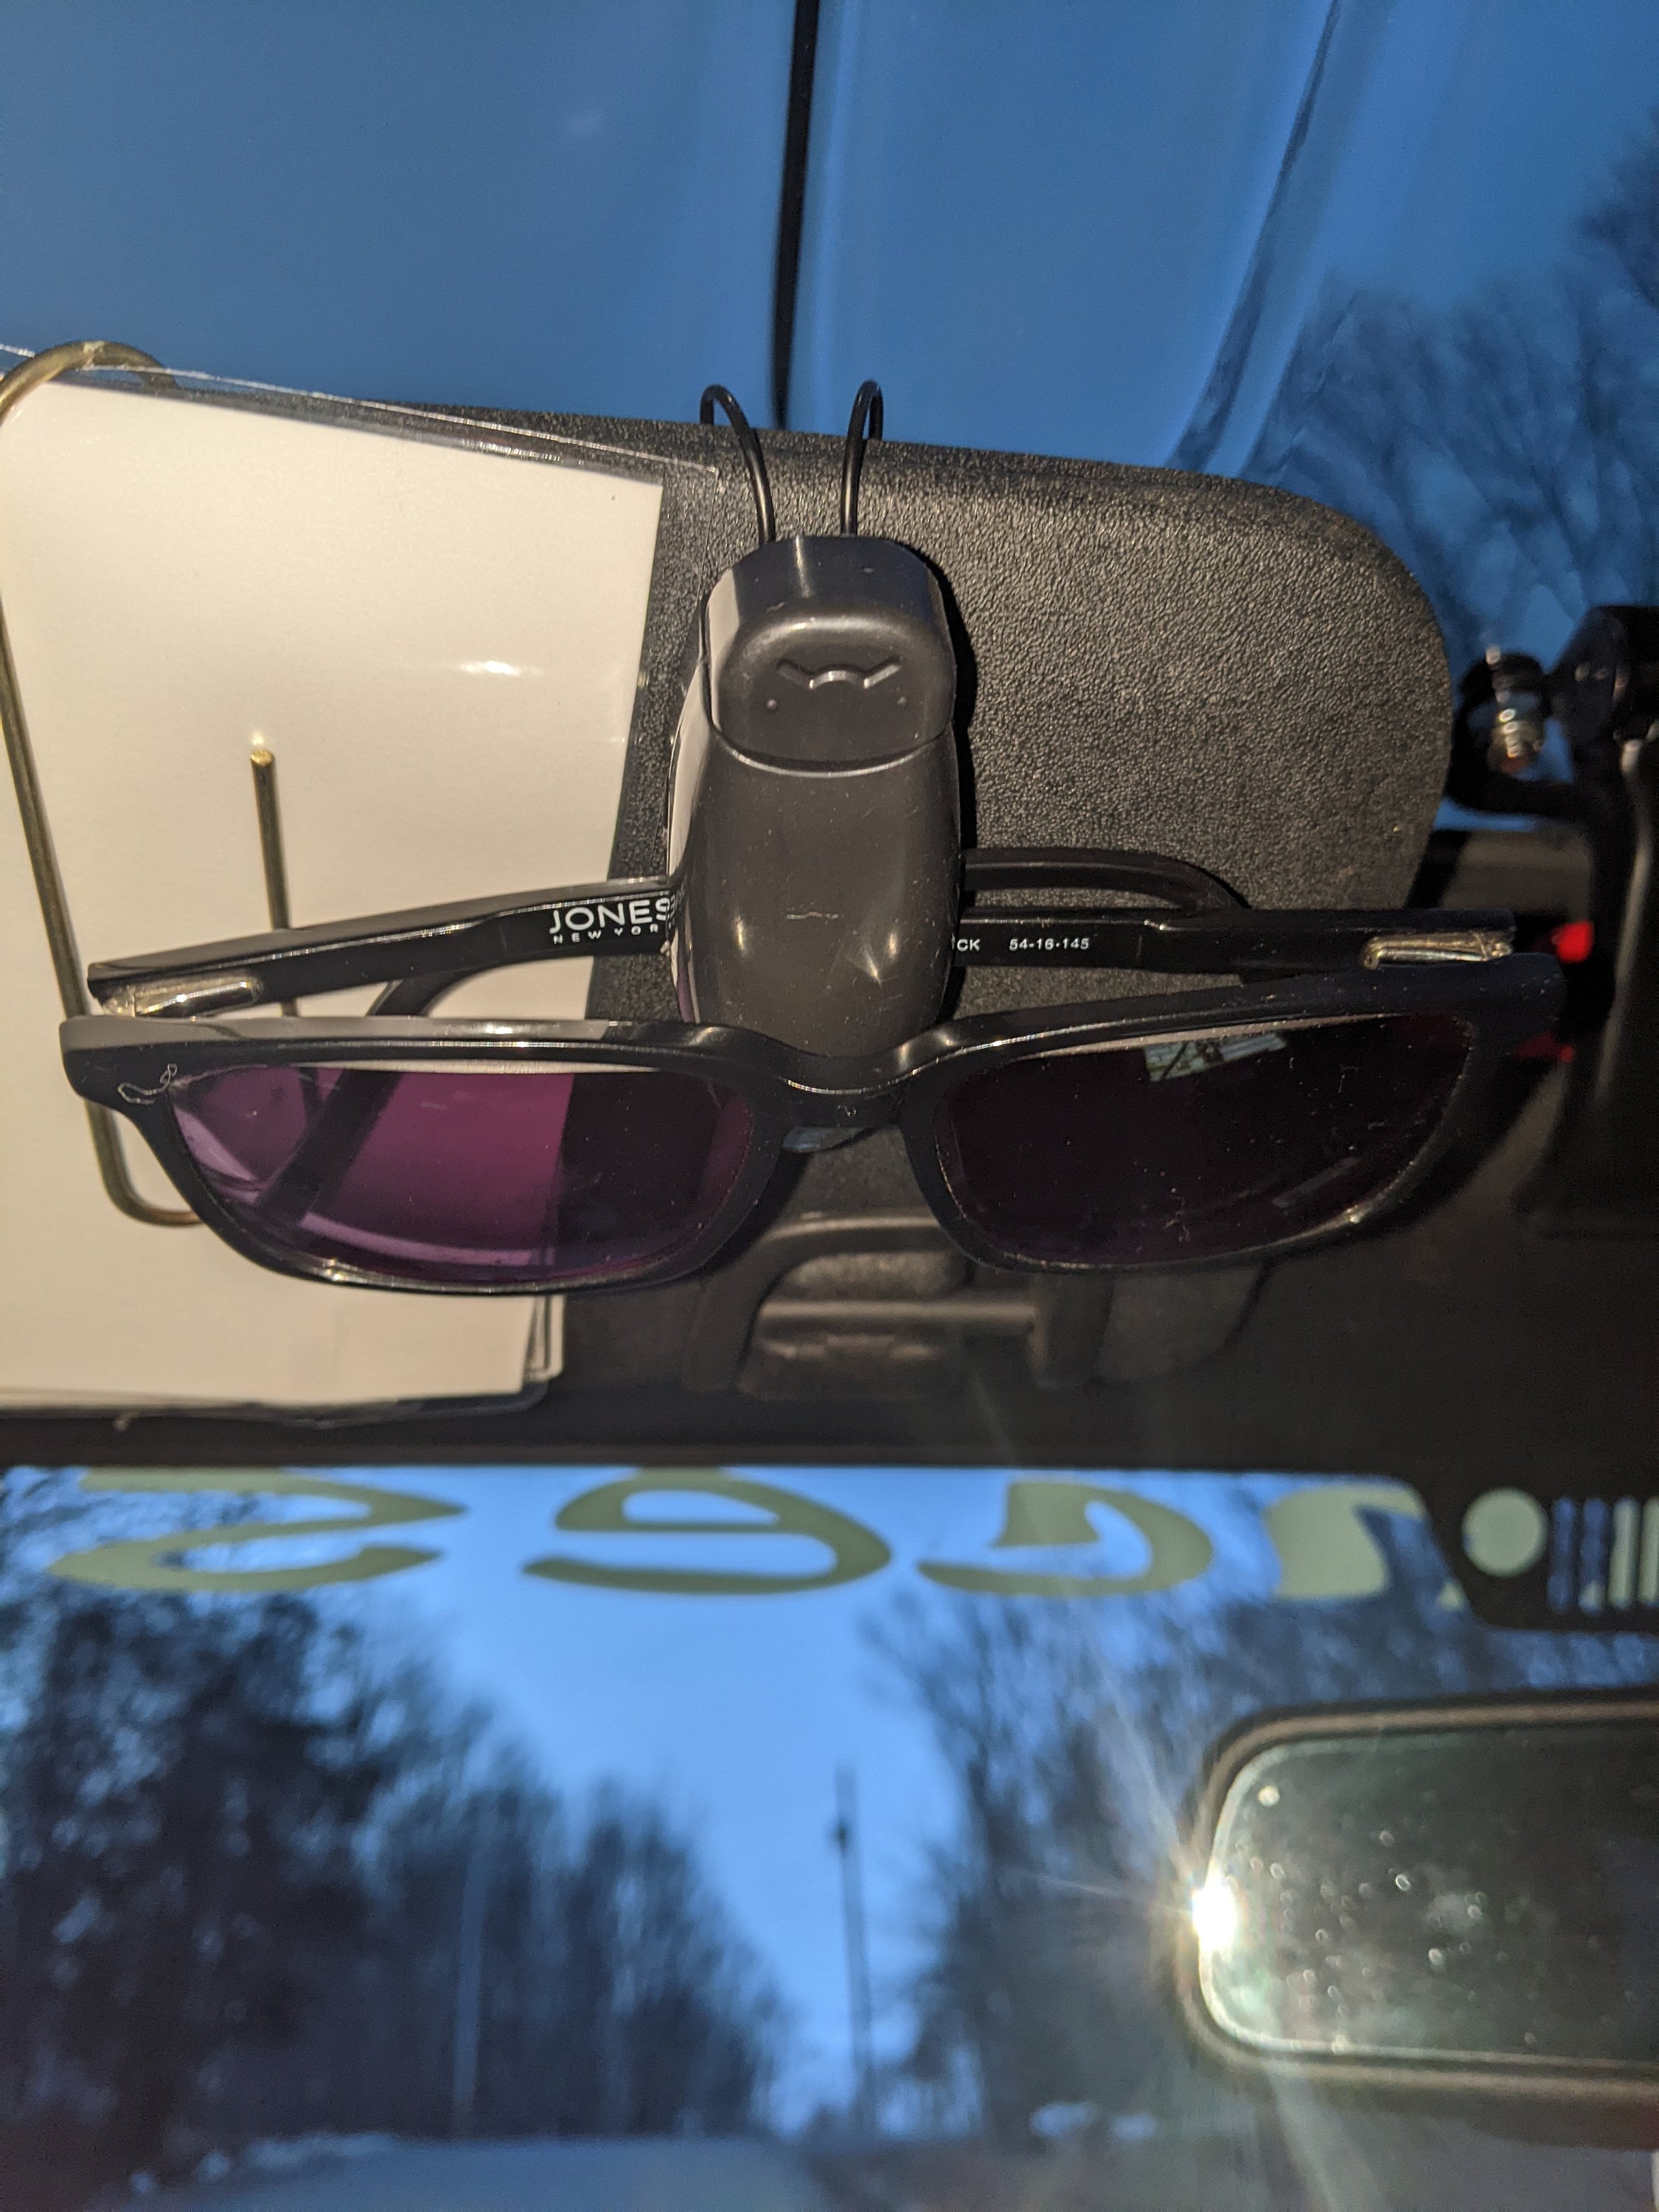 YFCTLM Car Sunglasses Holder 2 pcs ABS Auto Glasses Sunglasses Clip car Accessories Stickers For Land Rover Discovery 3 4 5 Freelander 2 Range Rover Evoque Sport 